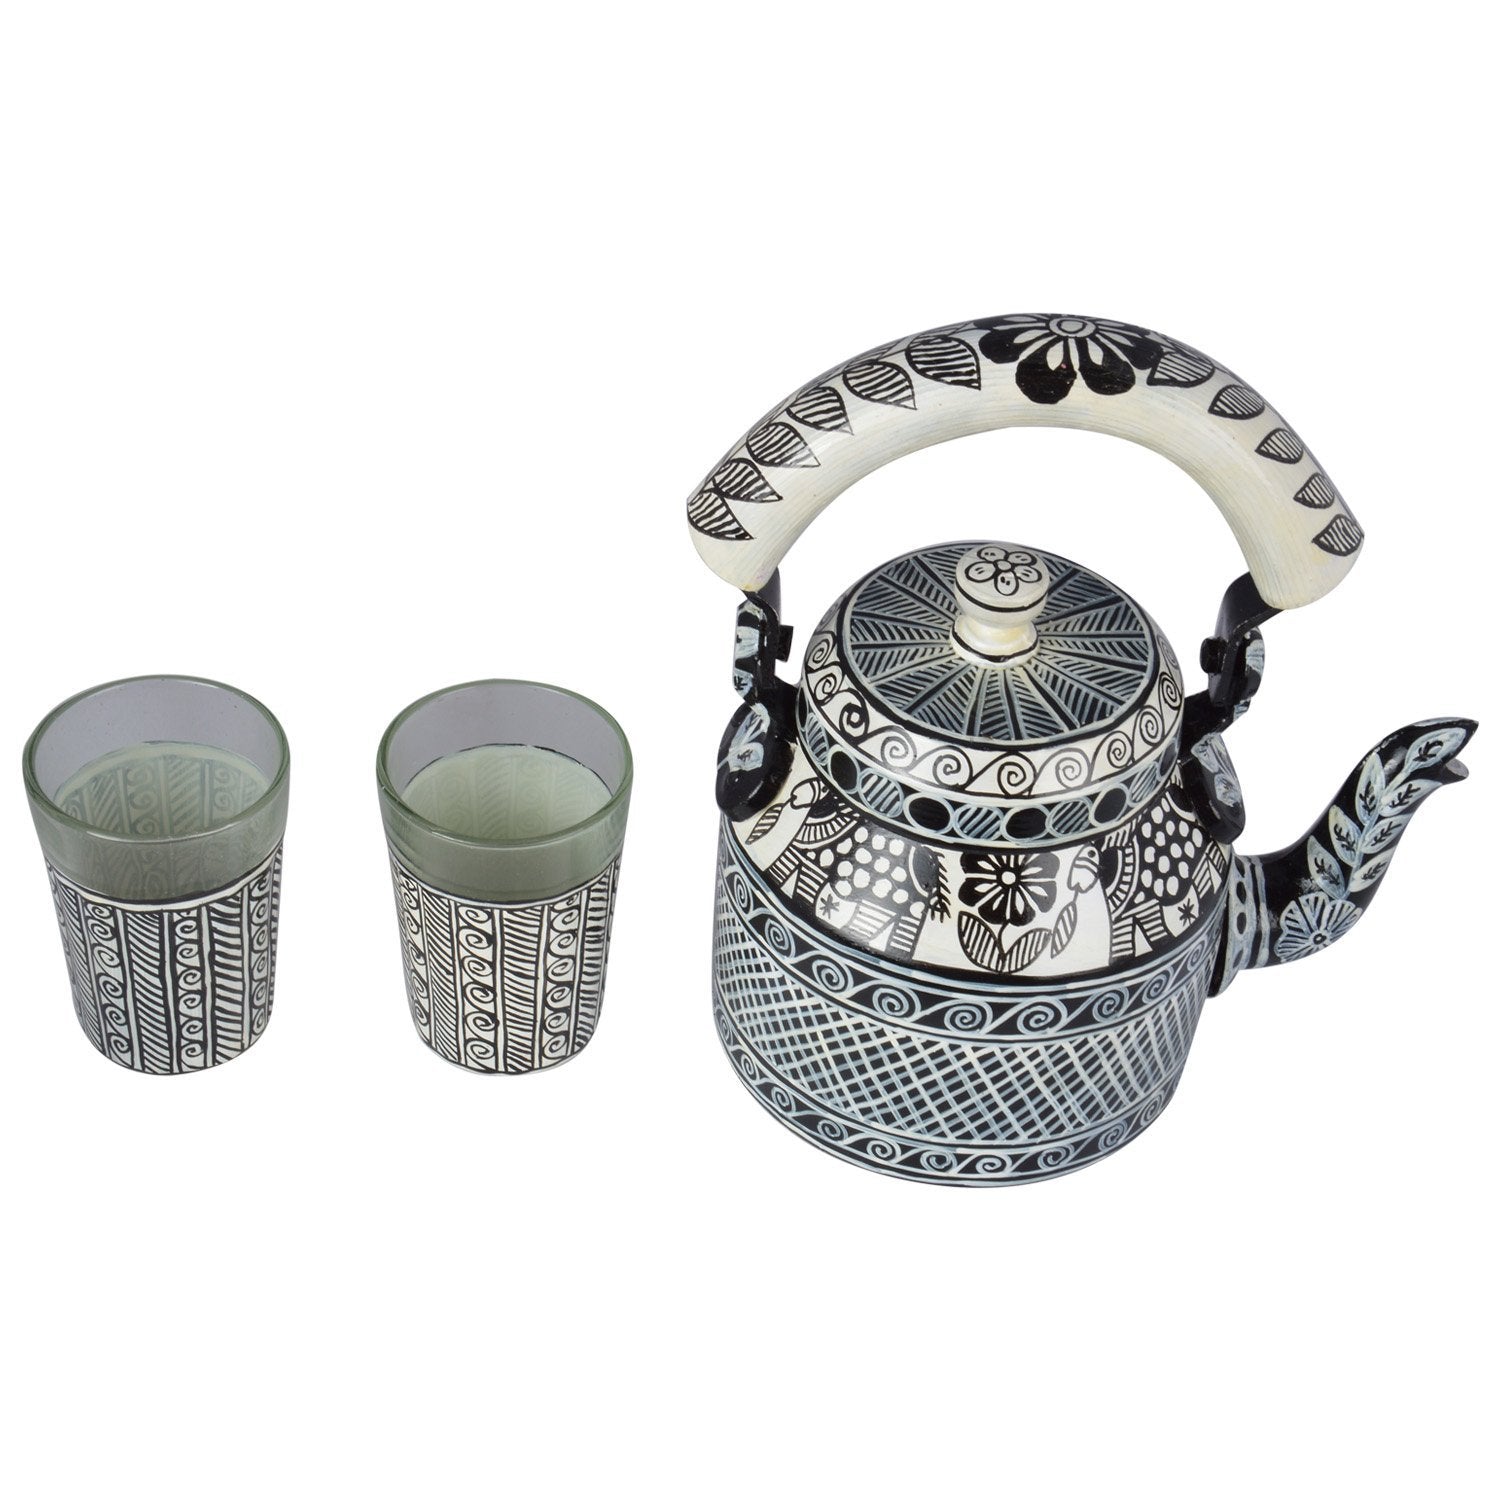 Tea kettle With Two Tea Glasses :  Tango Tea Set Black & White